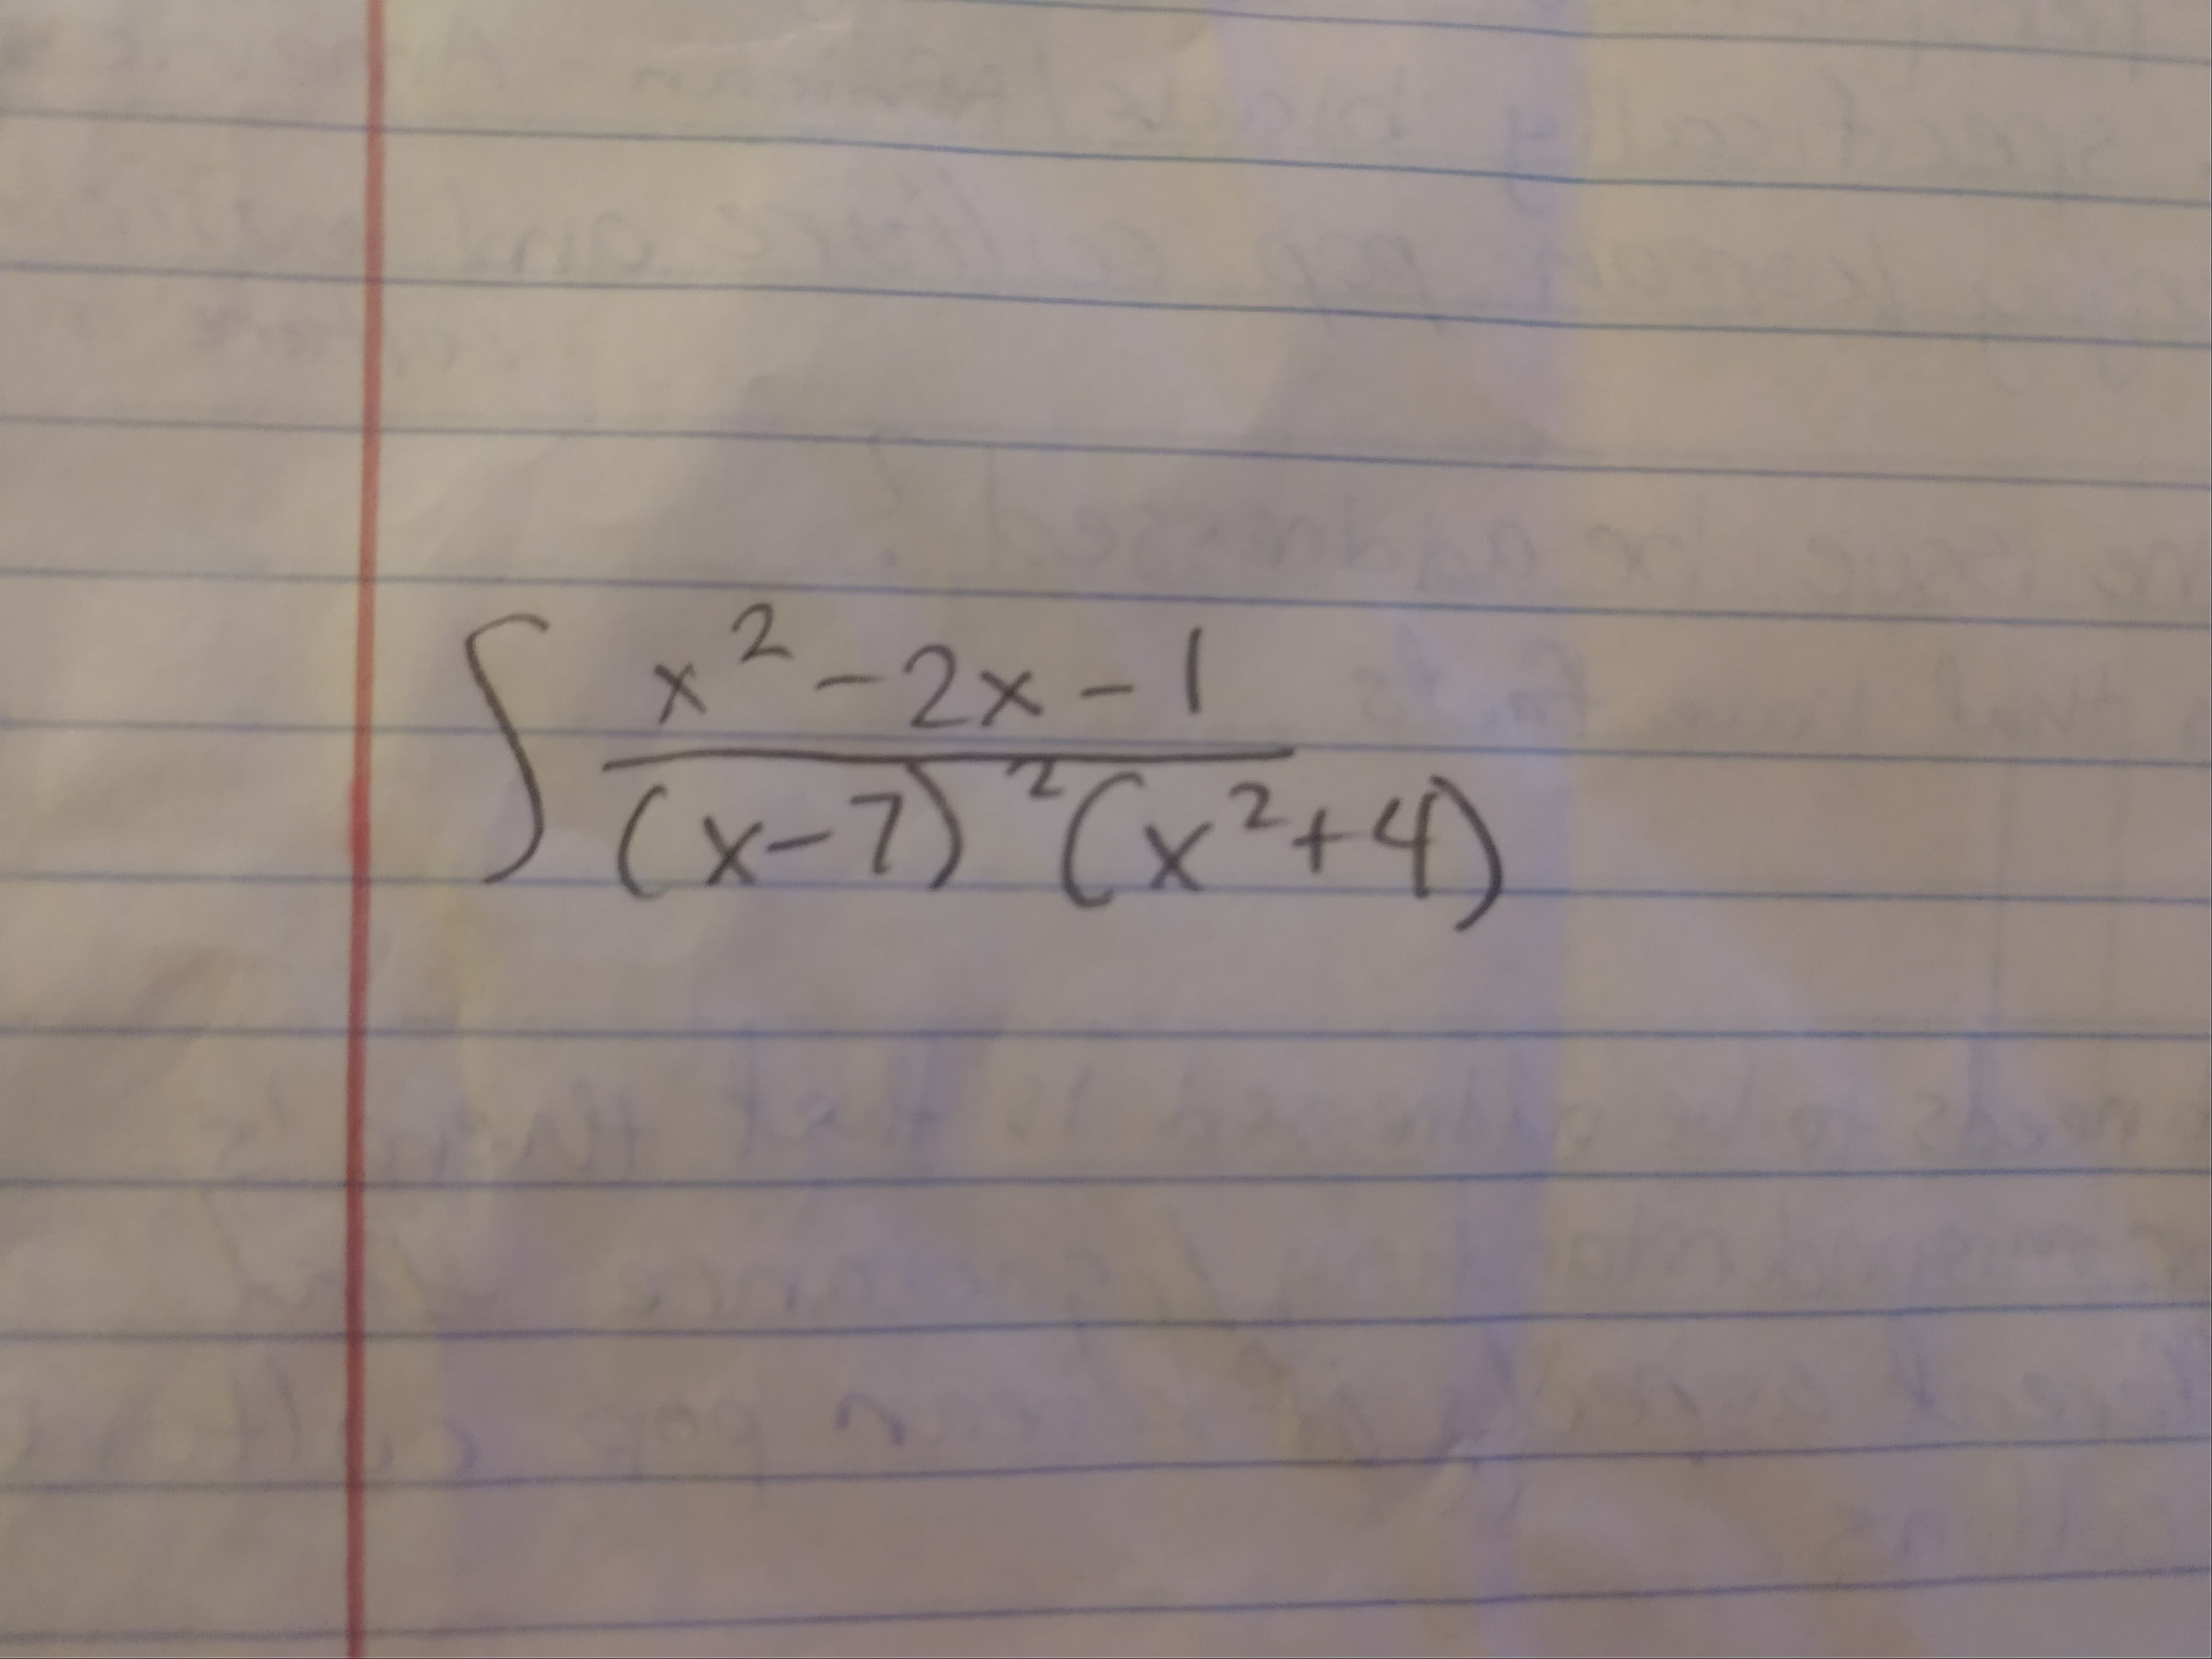 2>
(x-7)"(x²+4
